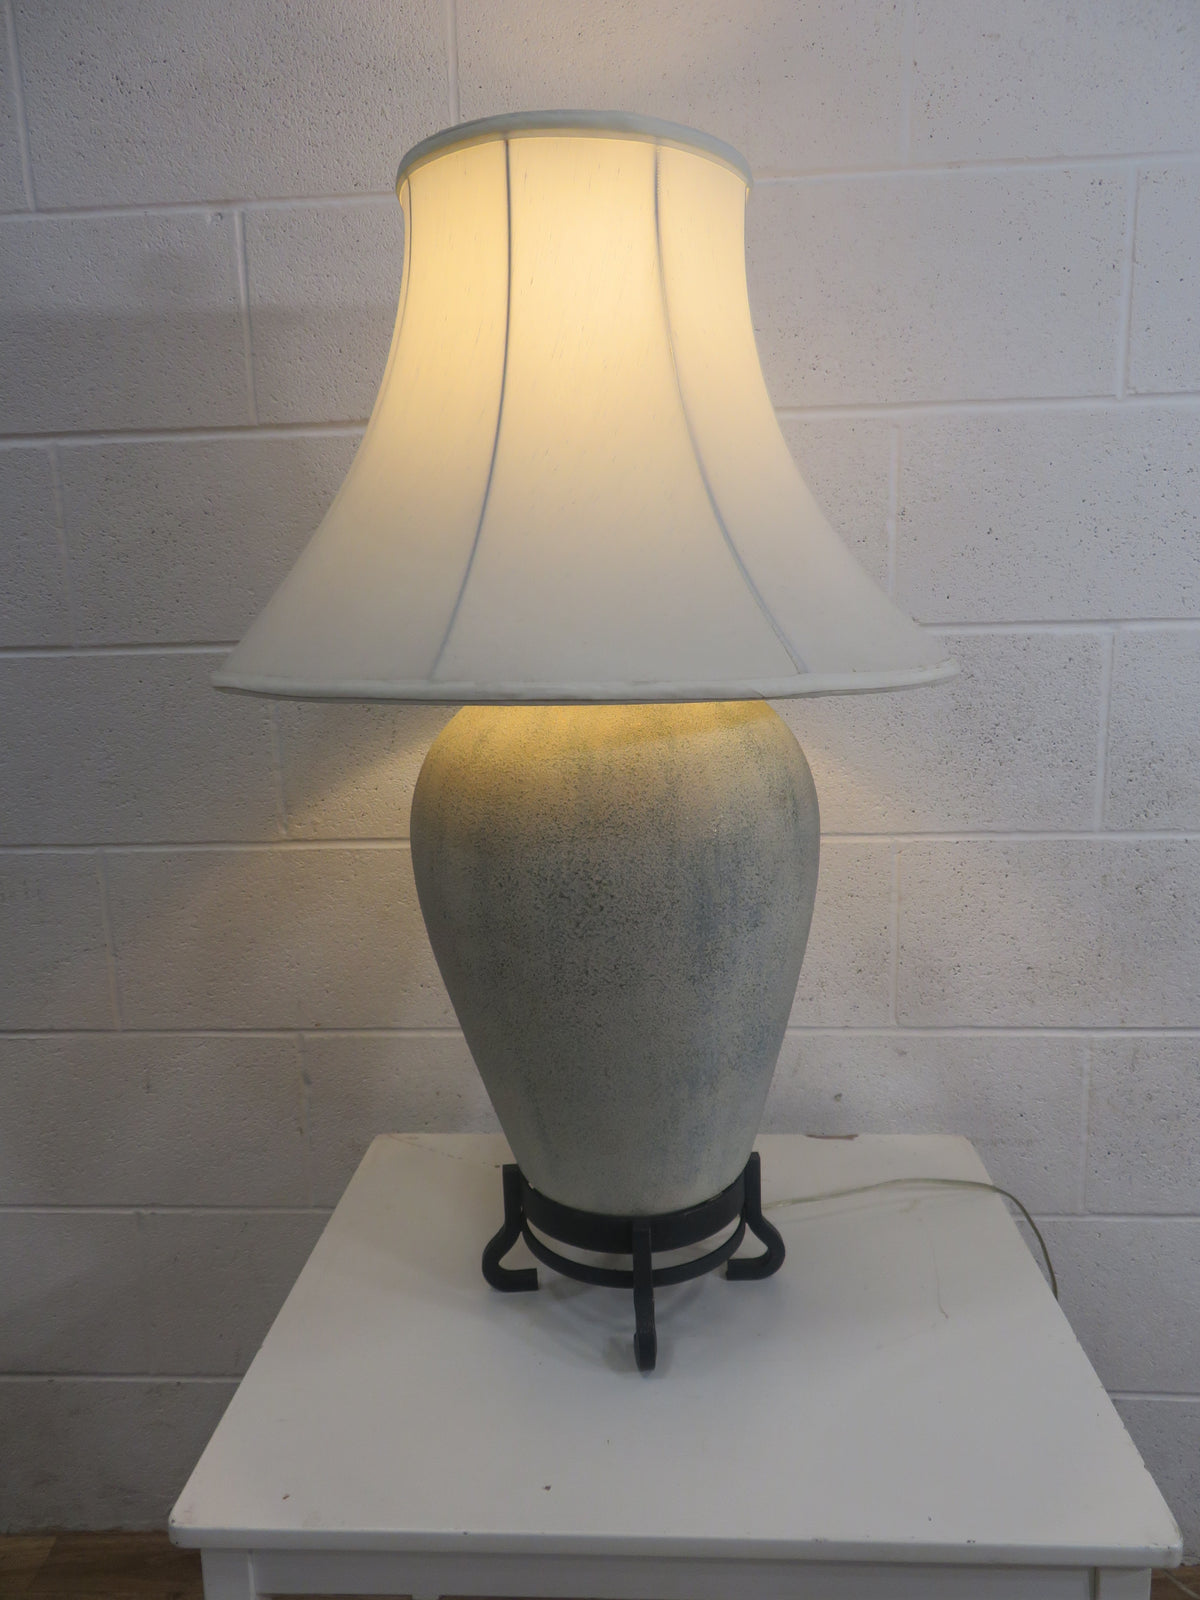 Ceramic Table Lamp on Wrought Iron Base